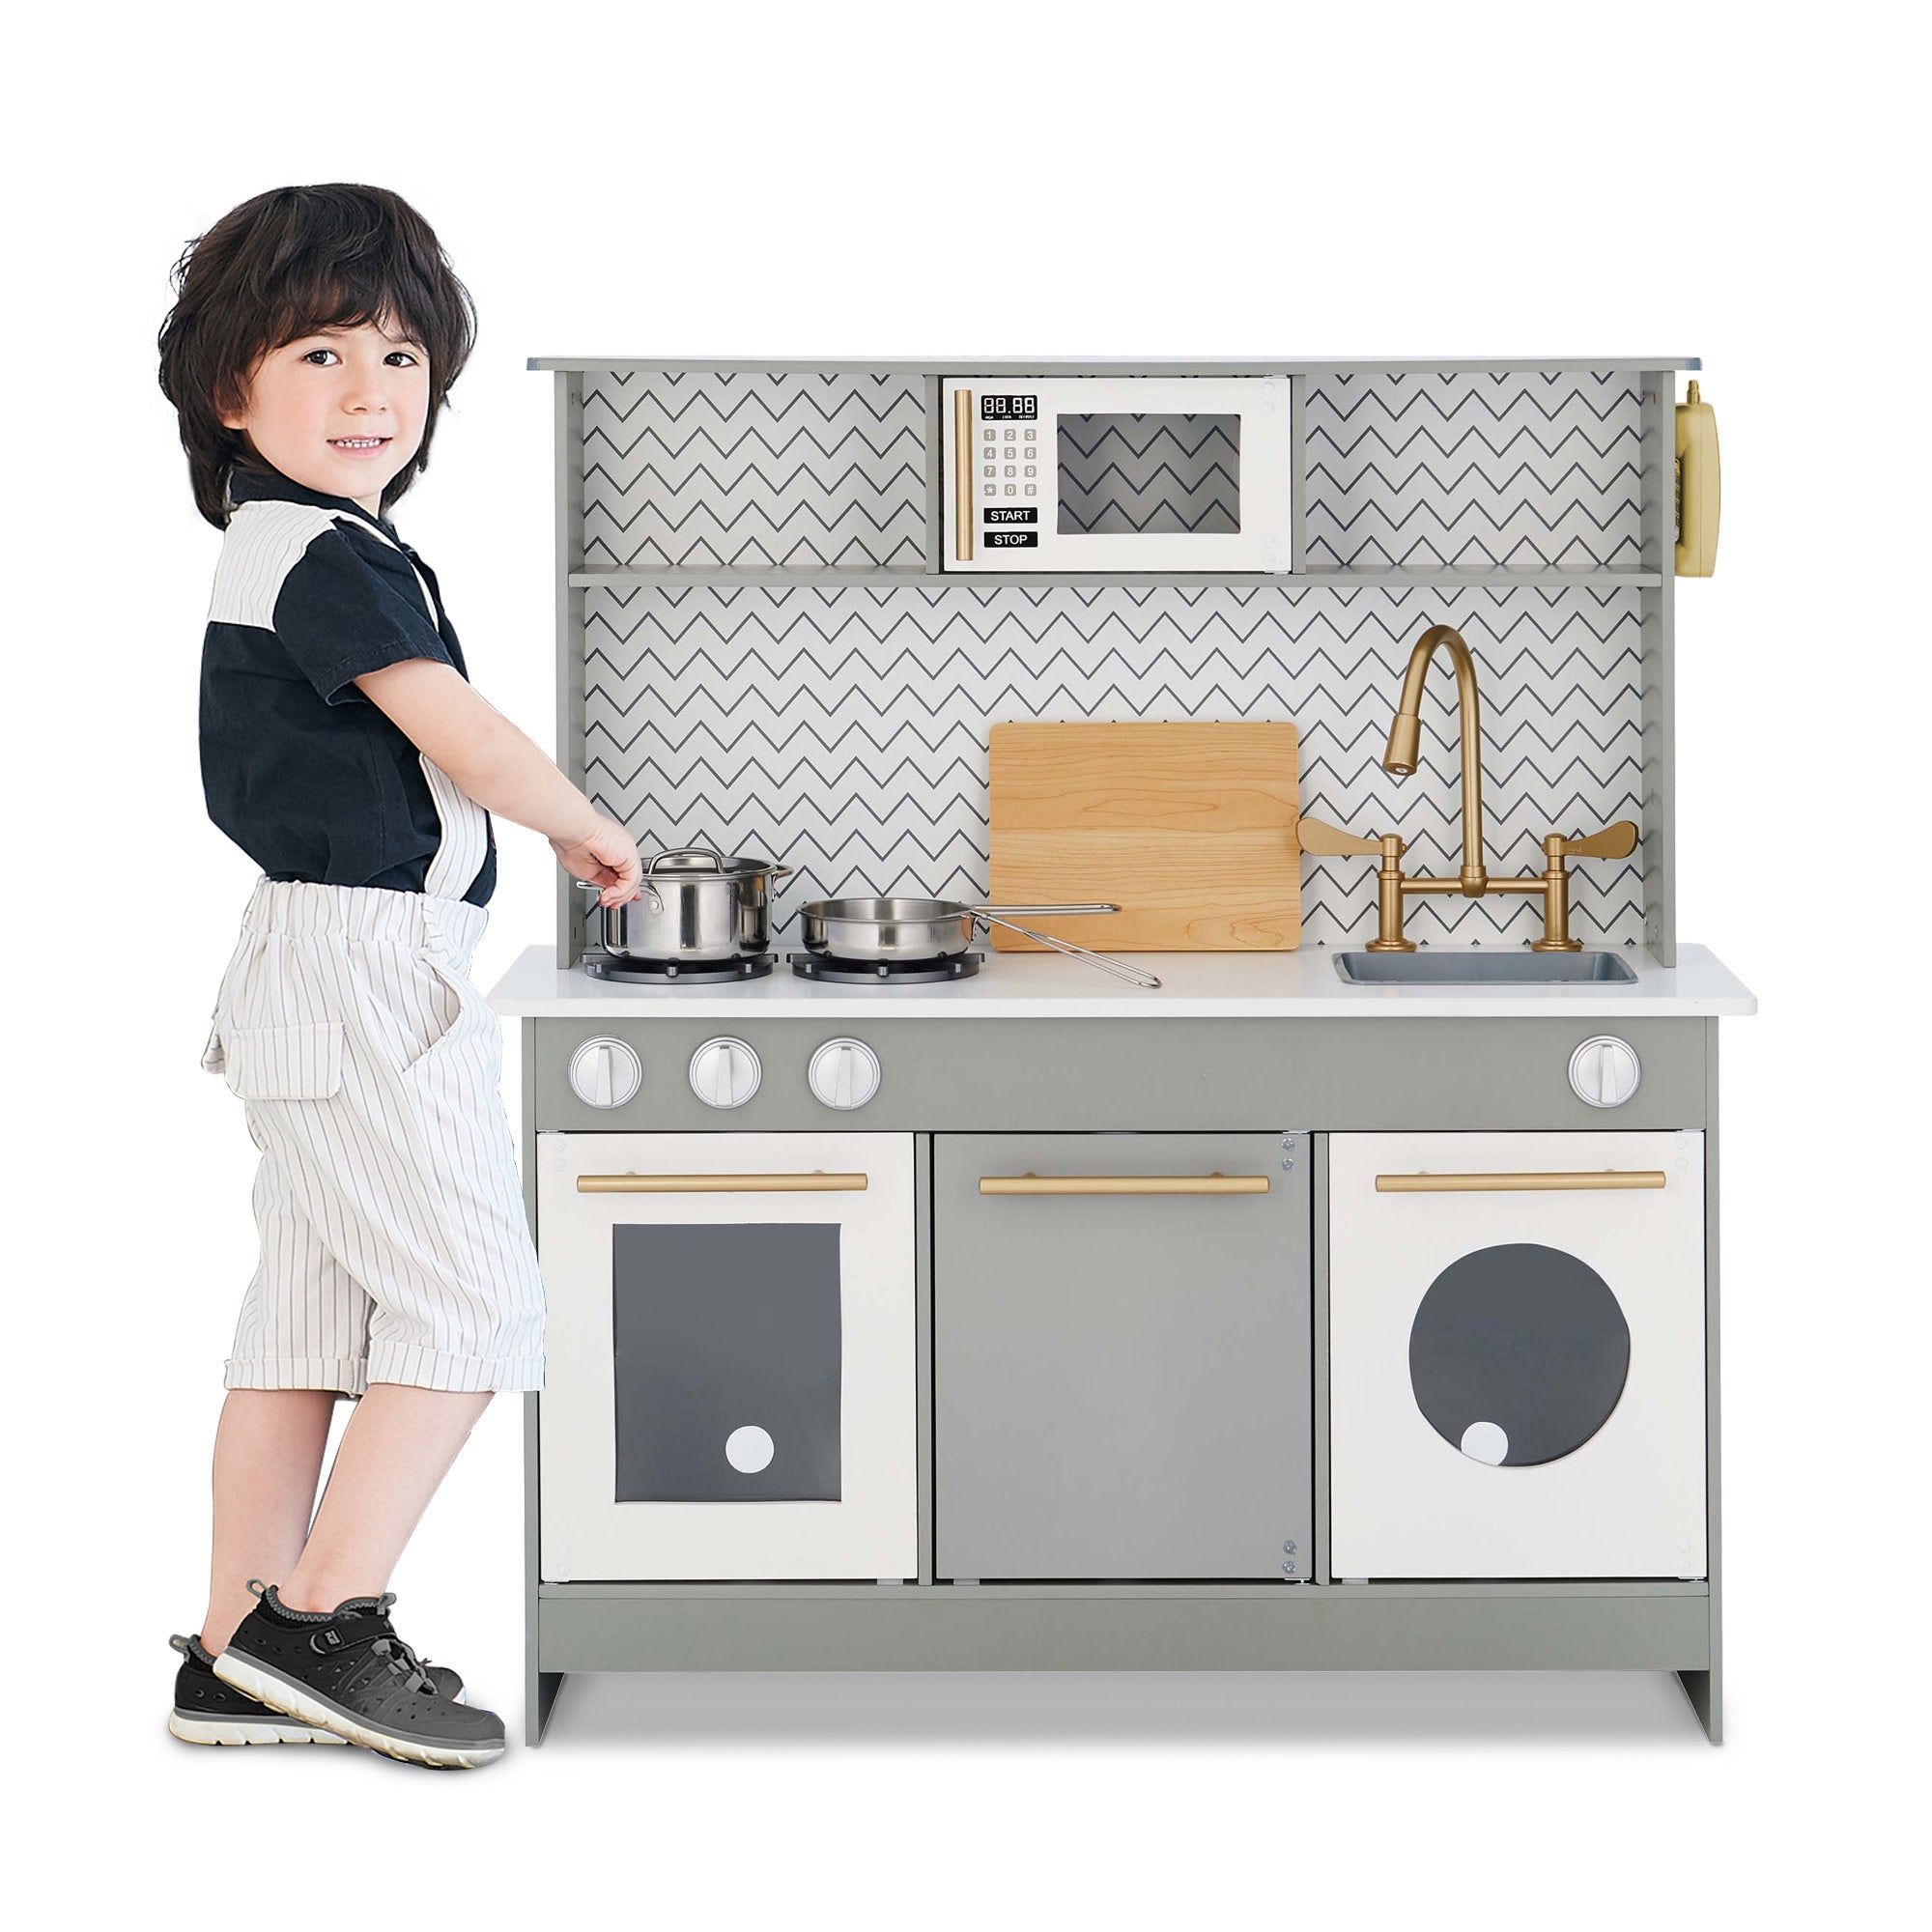 Teamson Kids Little Chef Berlin Modern Play Kitchen with 6 Accessories, Gray/White